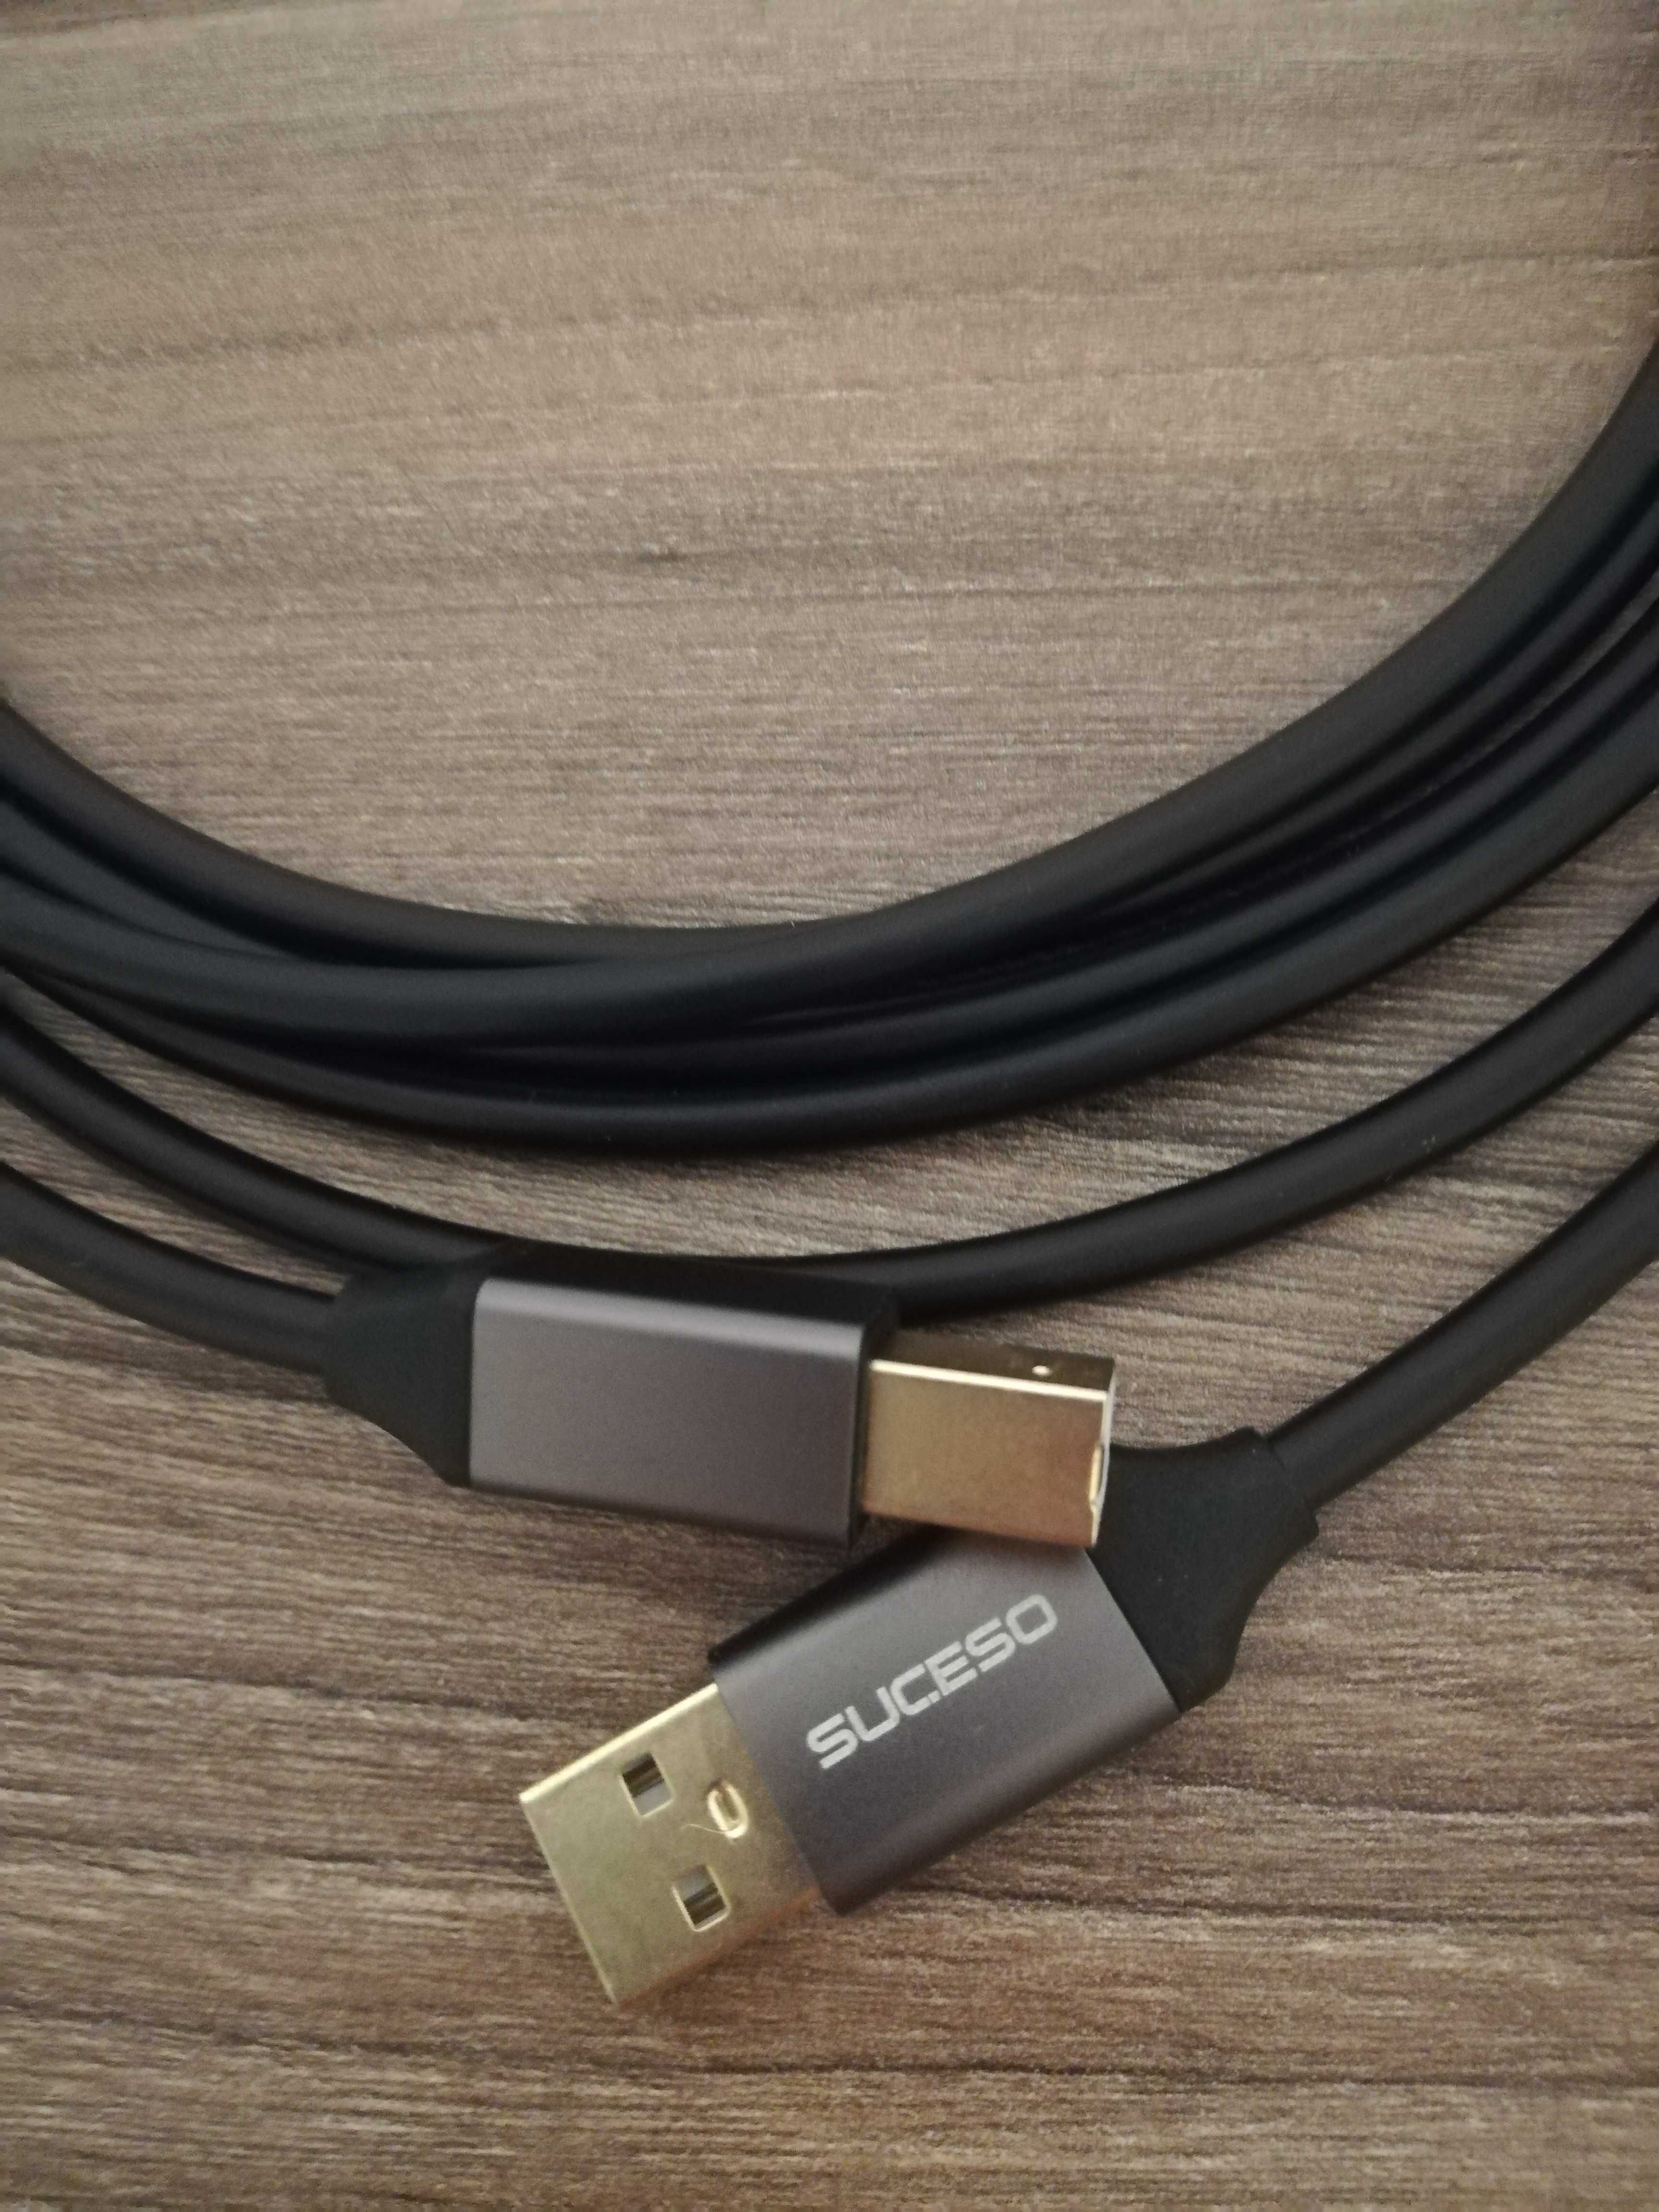 Kabel do drukarki USB 2 m/6,5 stopy USB 2.0 typ A SUCESO.